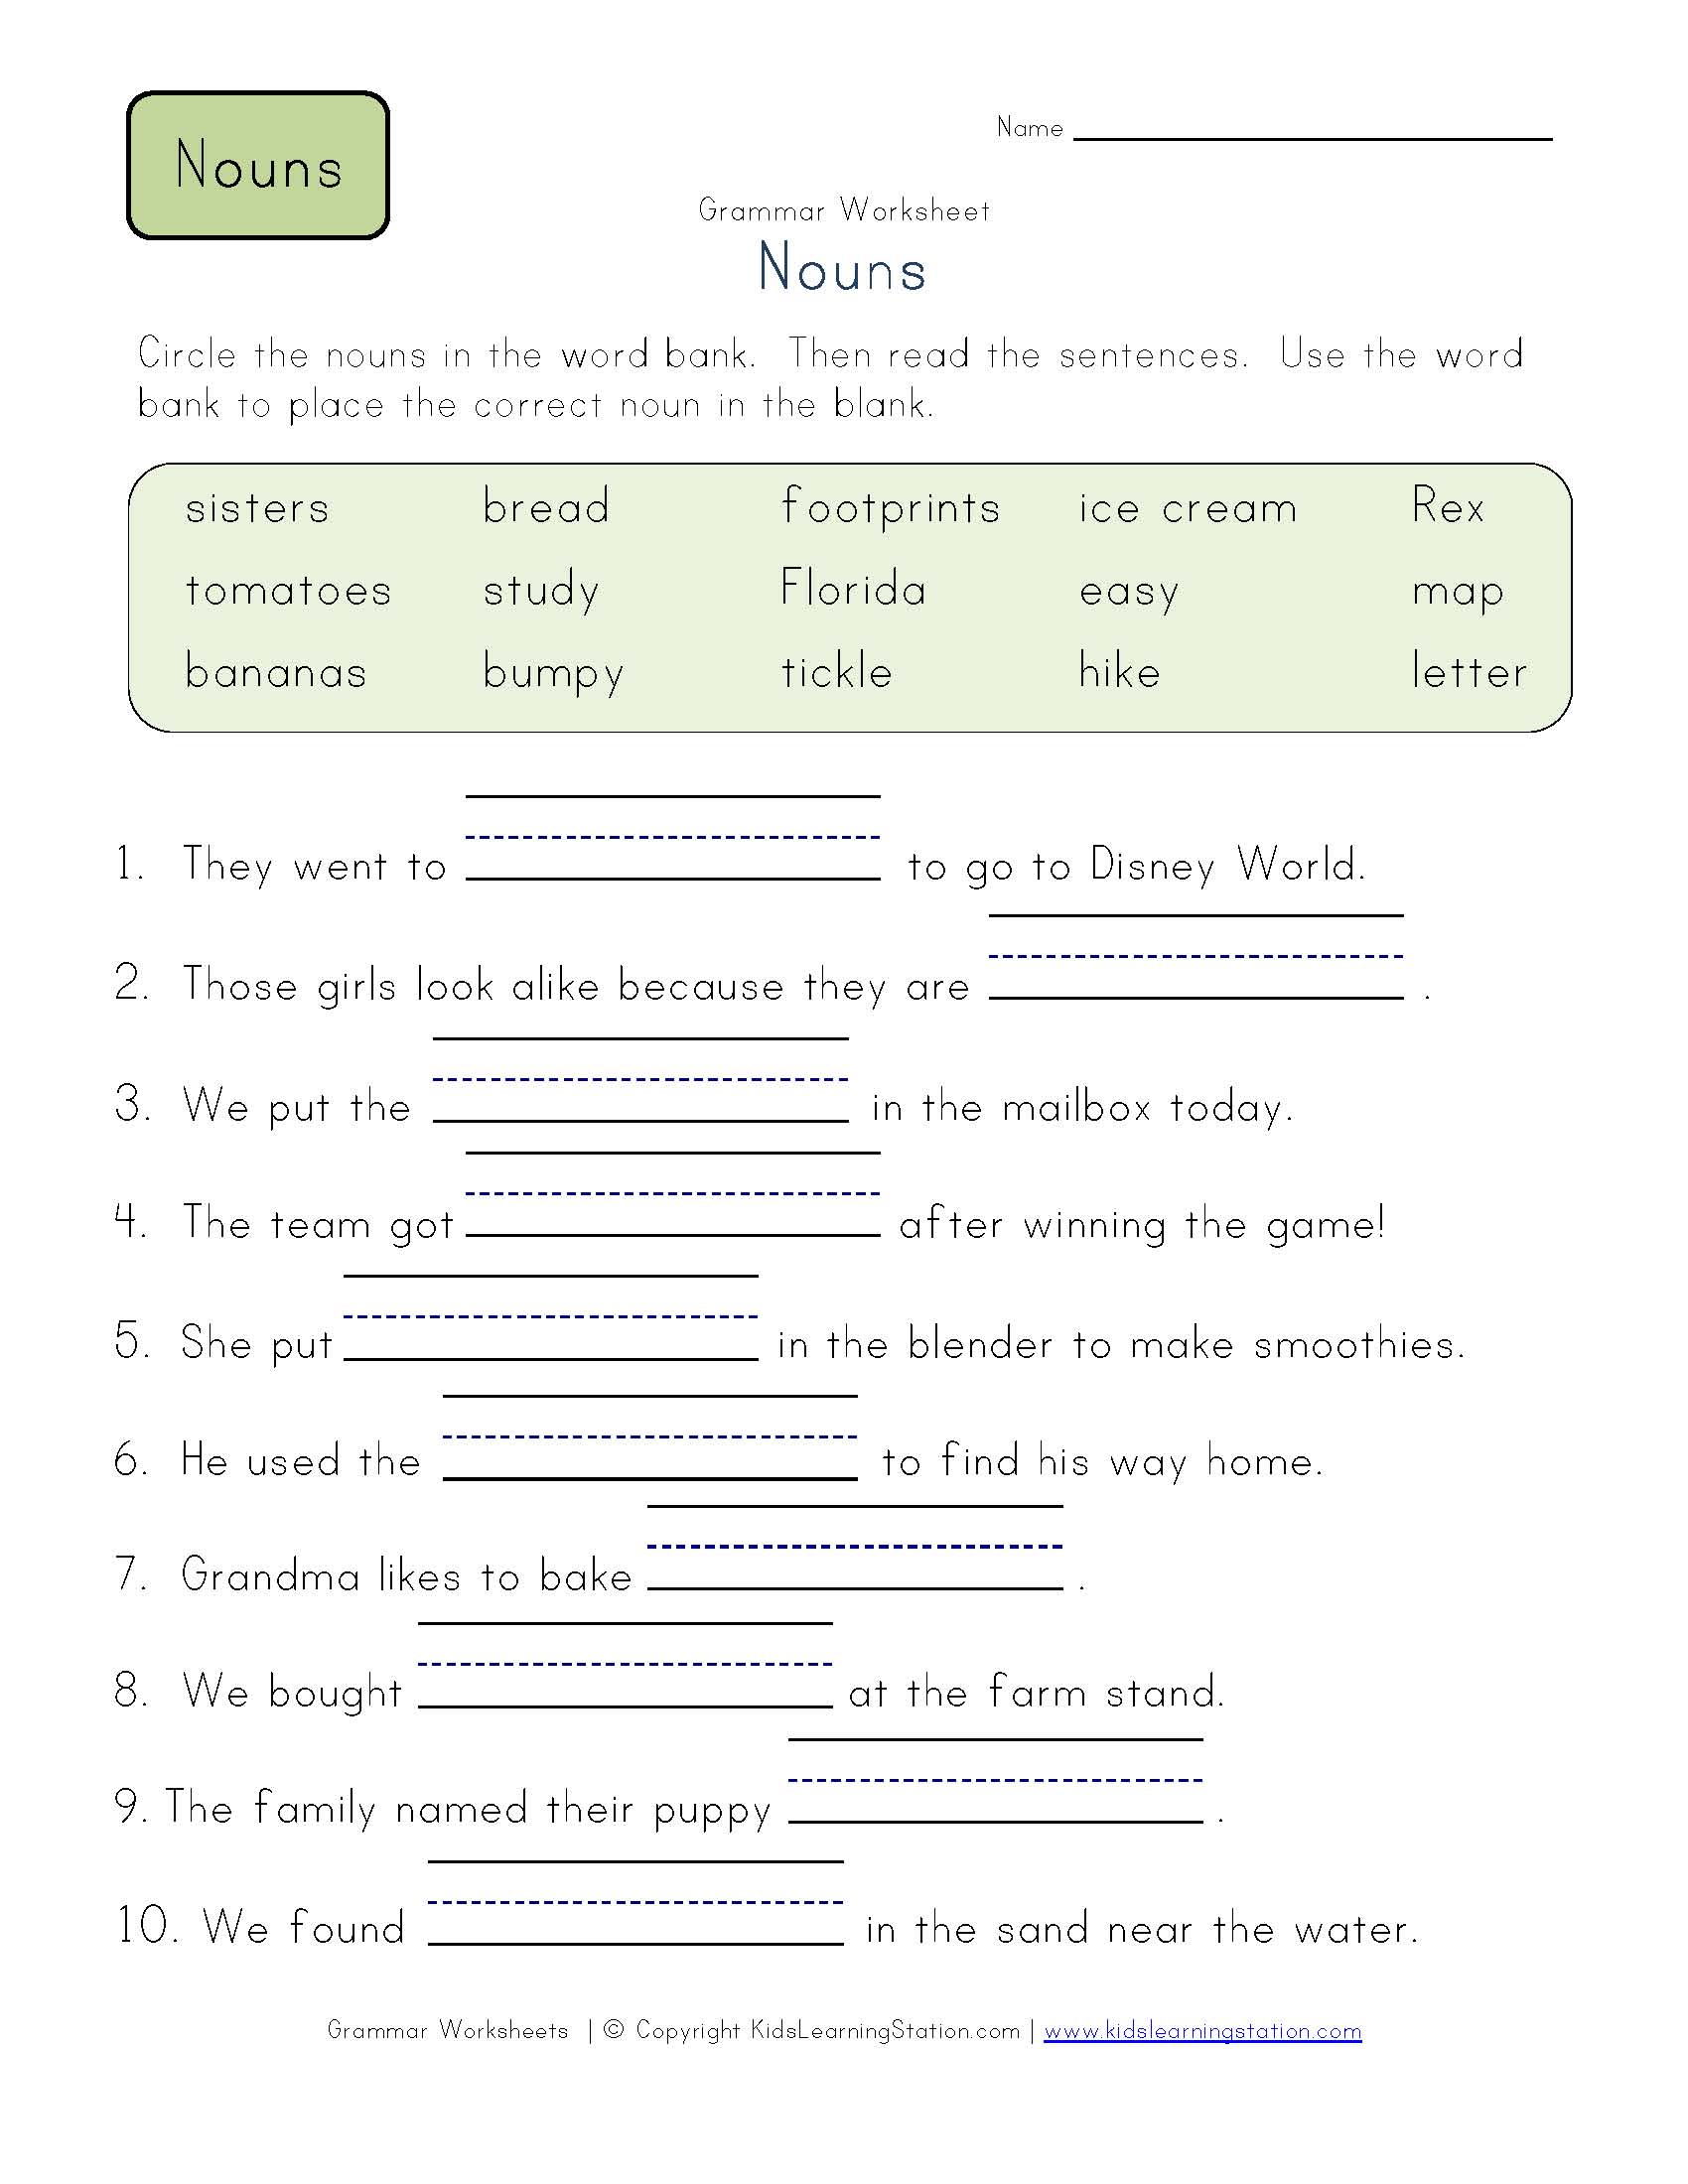 Grammar Worksheet Nouns LELA